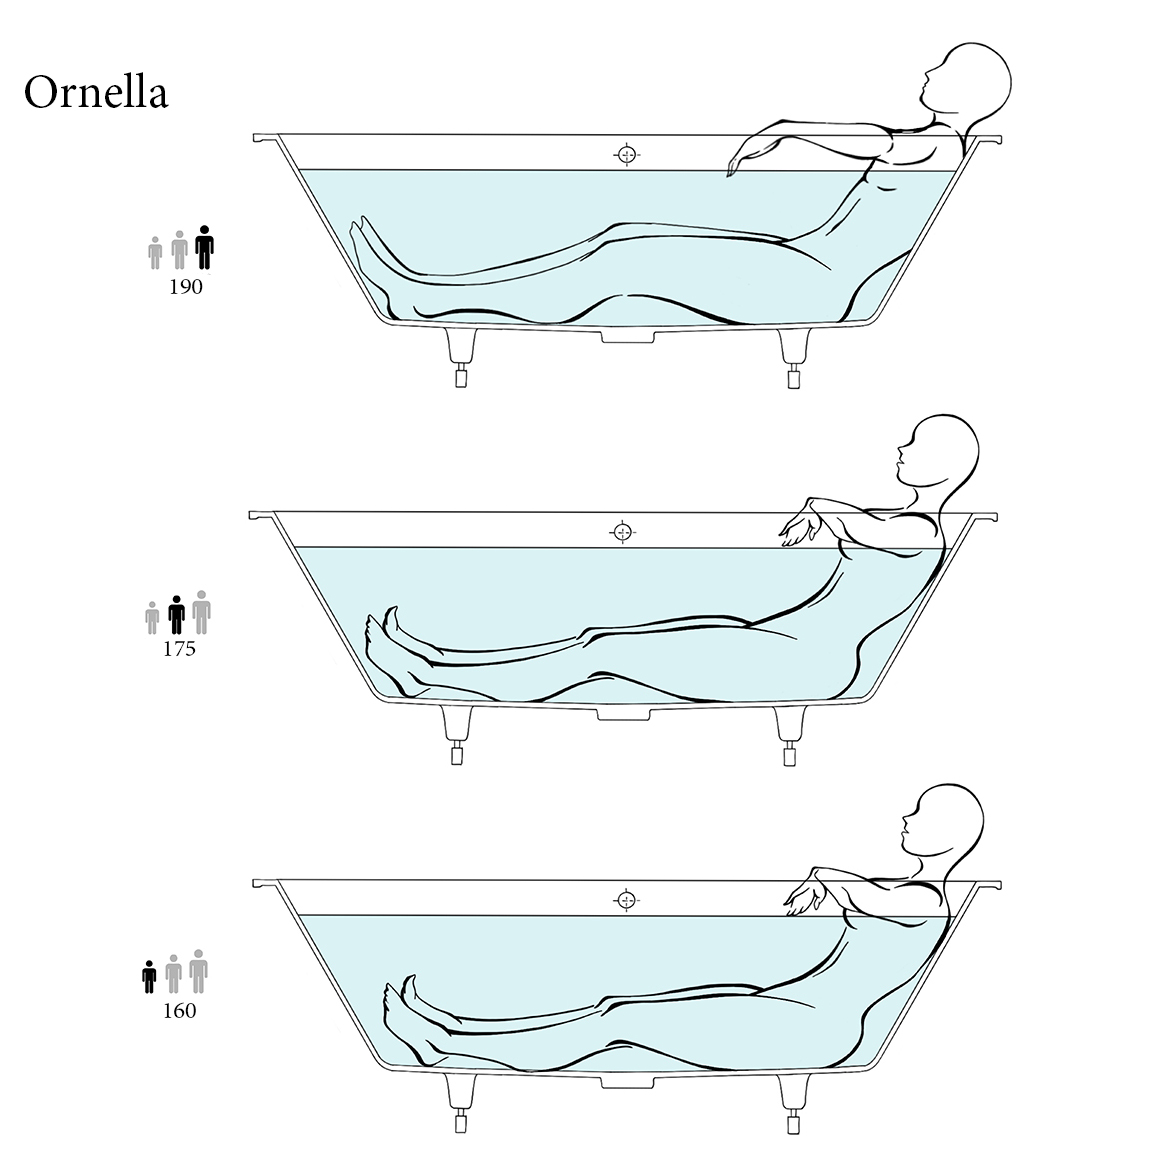 Salini Ornella Axis 180 Встраиваемая ванна 180х80х60см, прямоугольная, материал: S-Sense, цвет: белый матовый